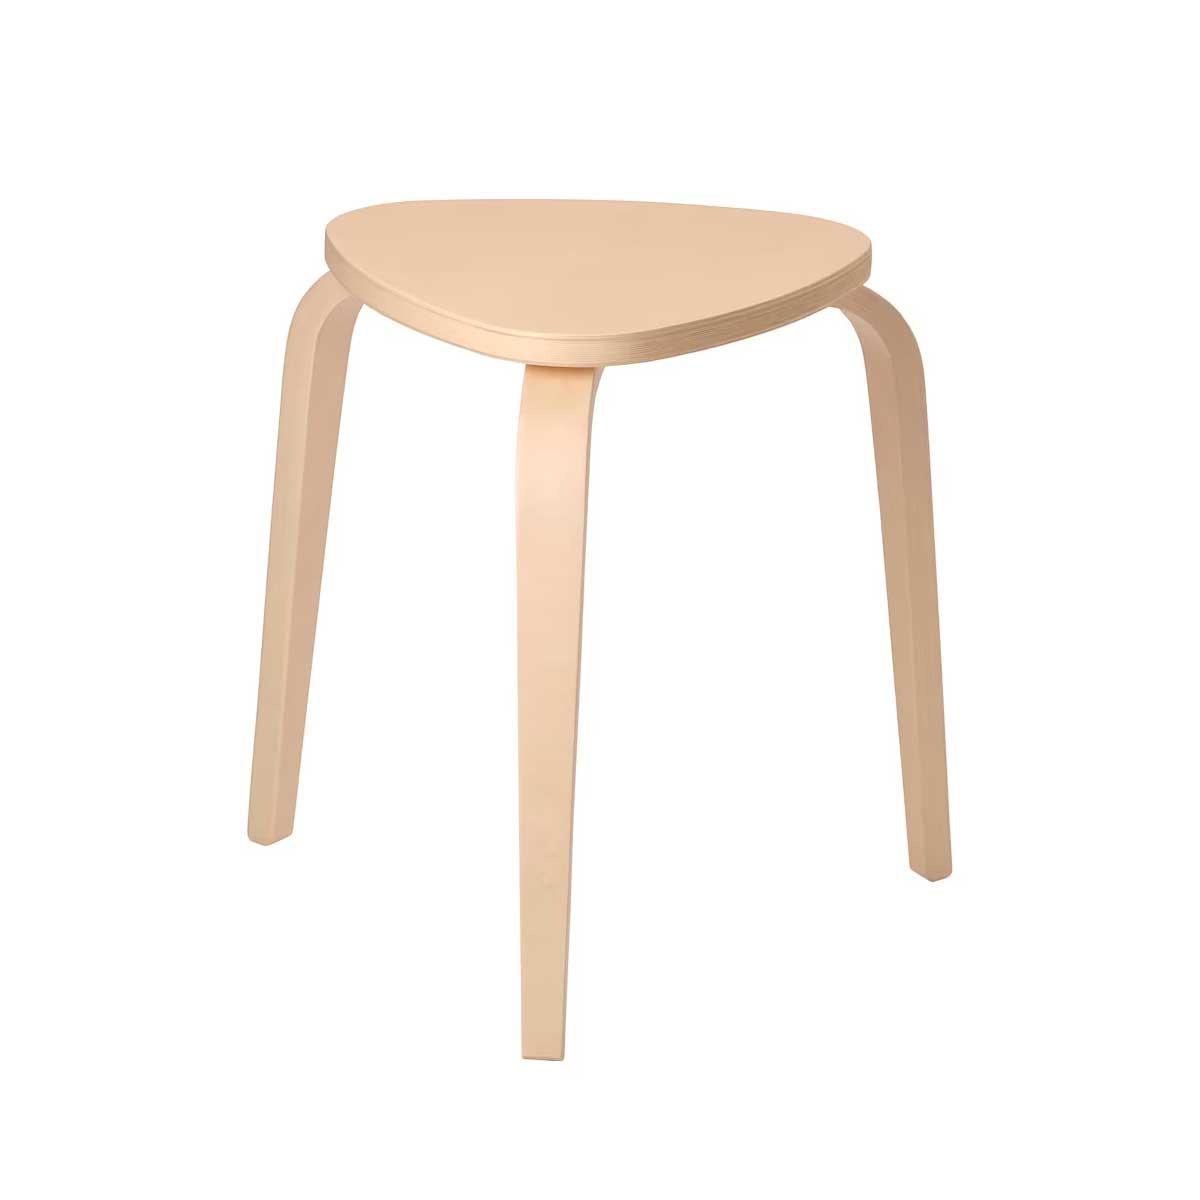 Kyrre stool chair